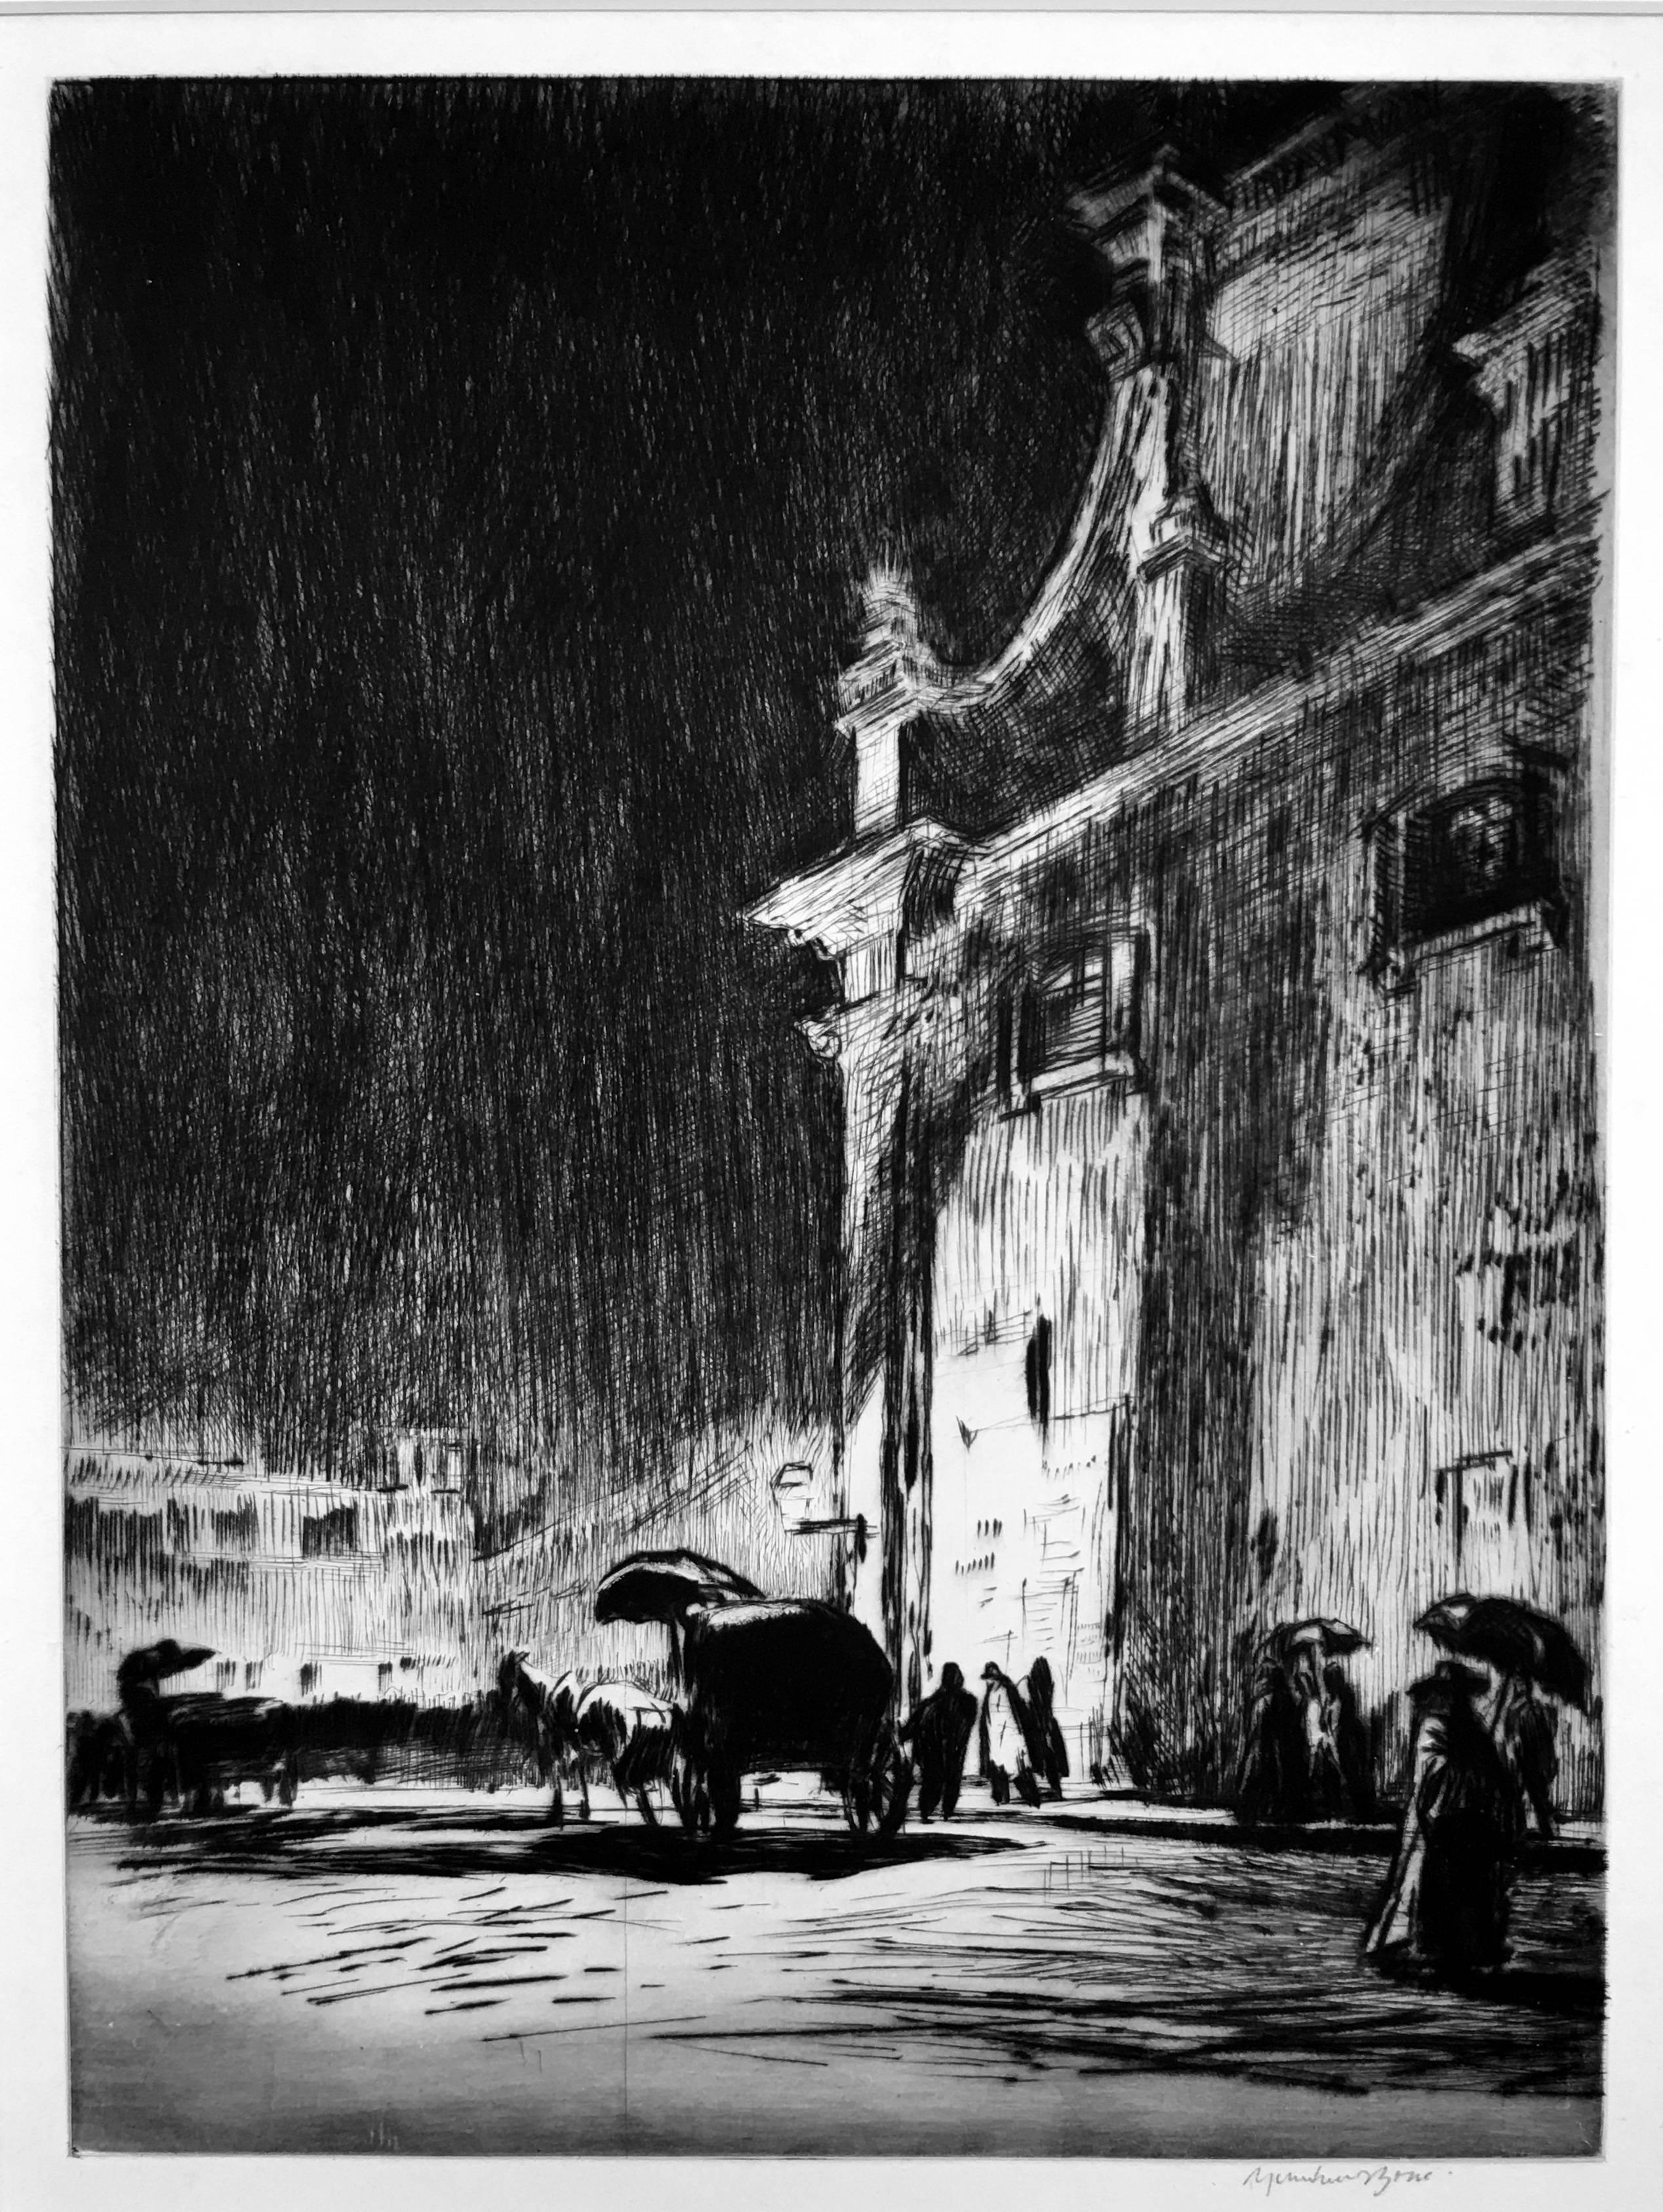 Sir Muirhead Bone Landscape Print - Rainy Night in Rome